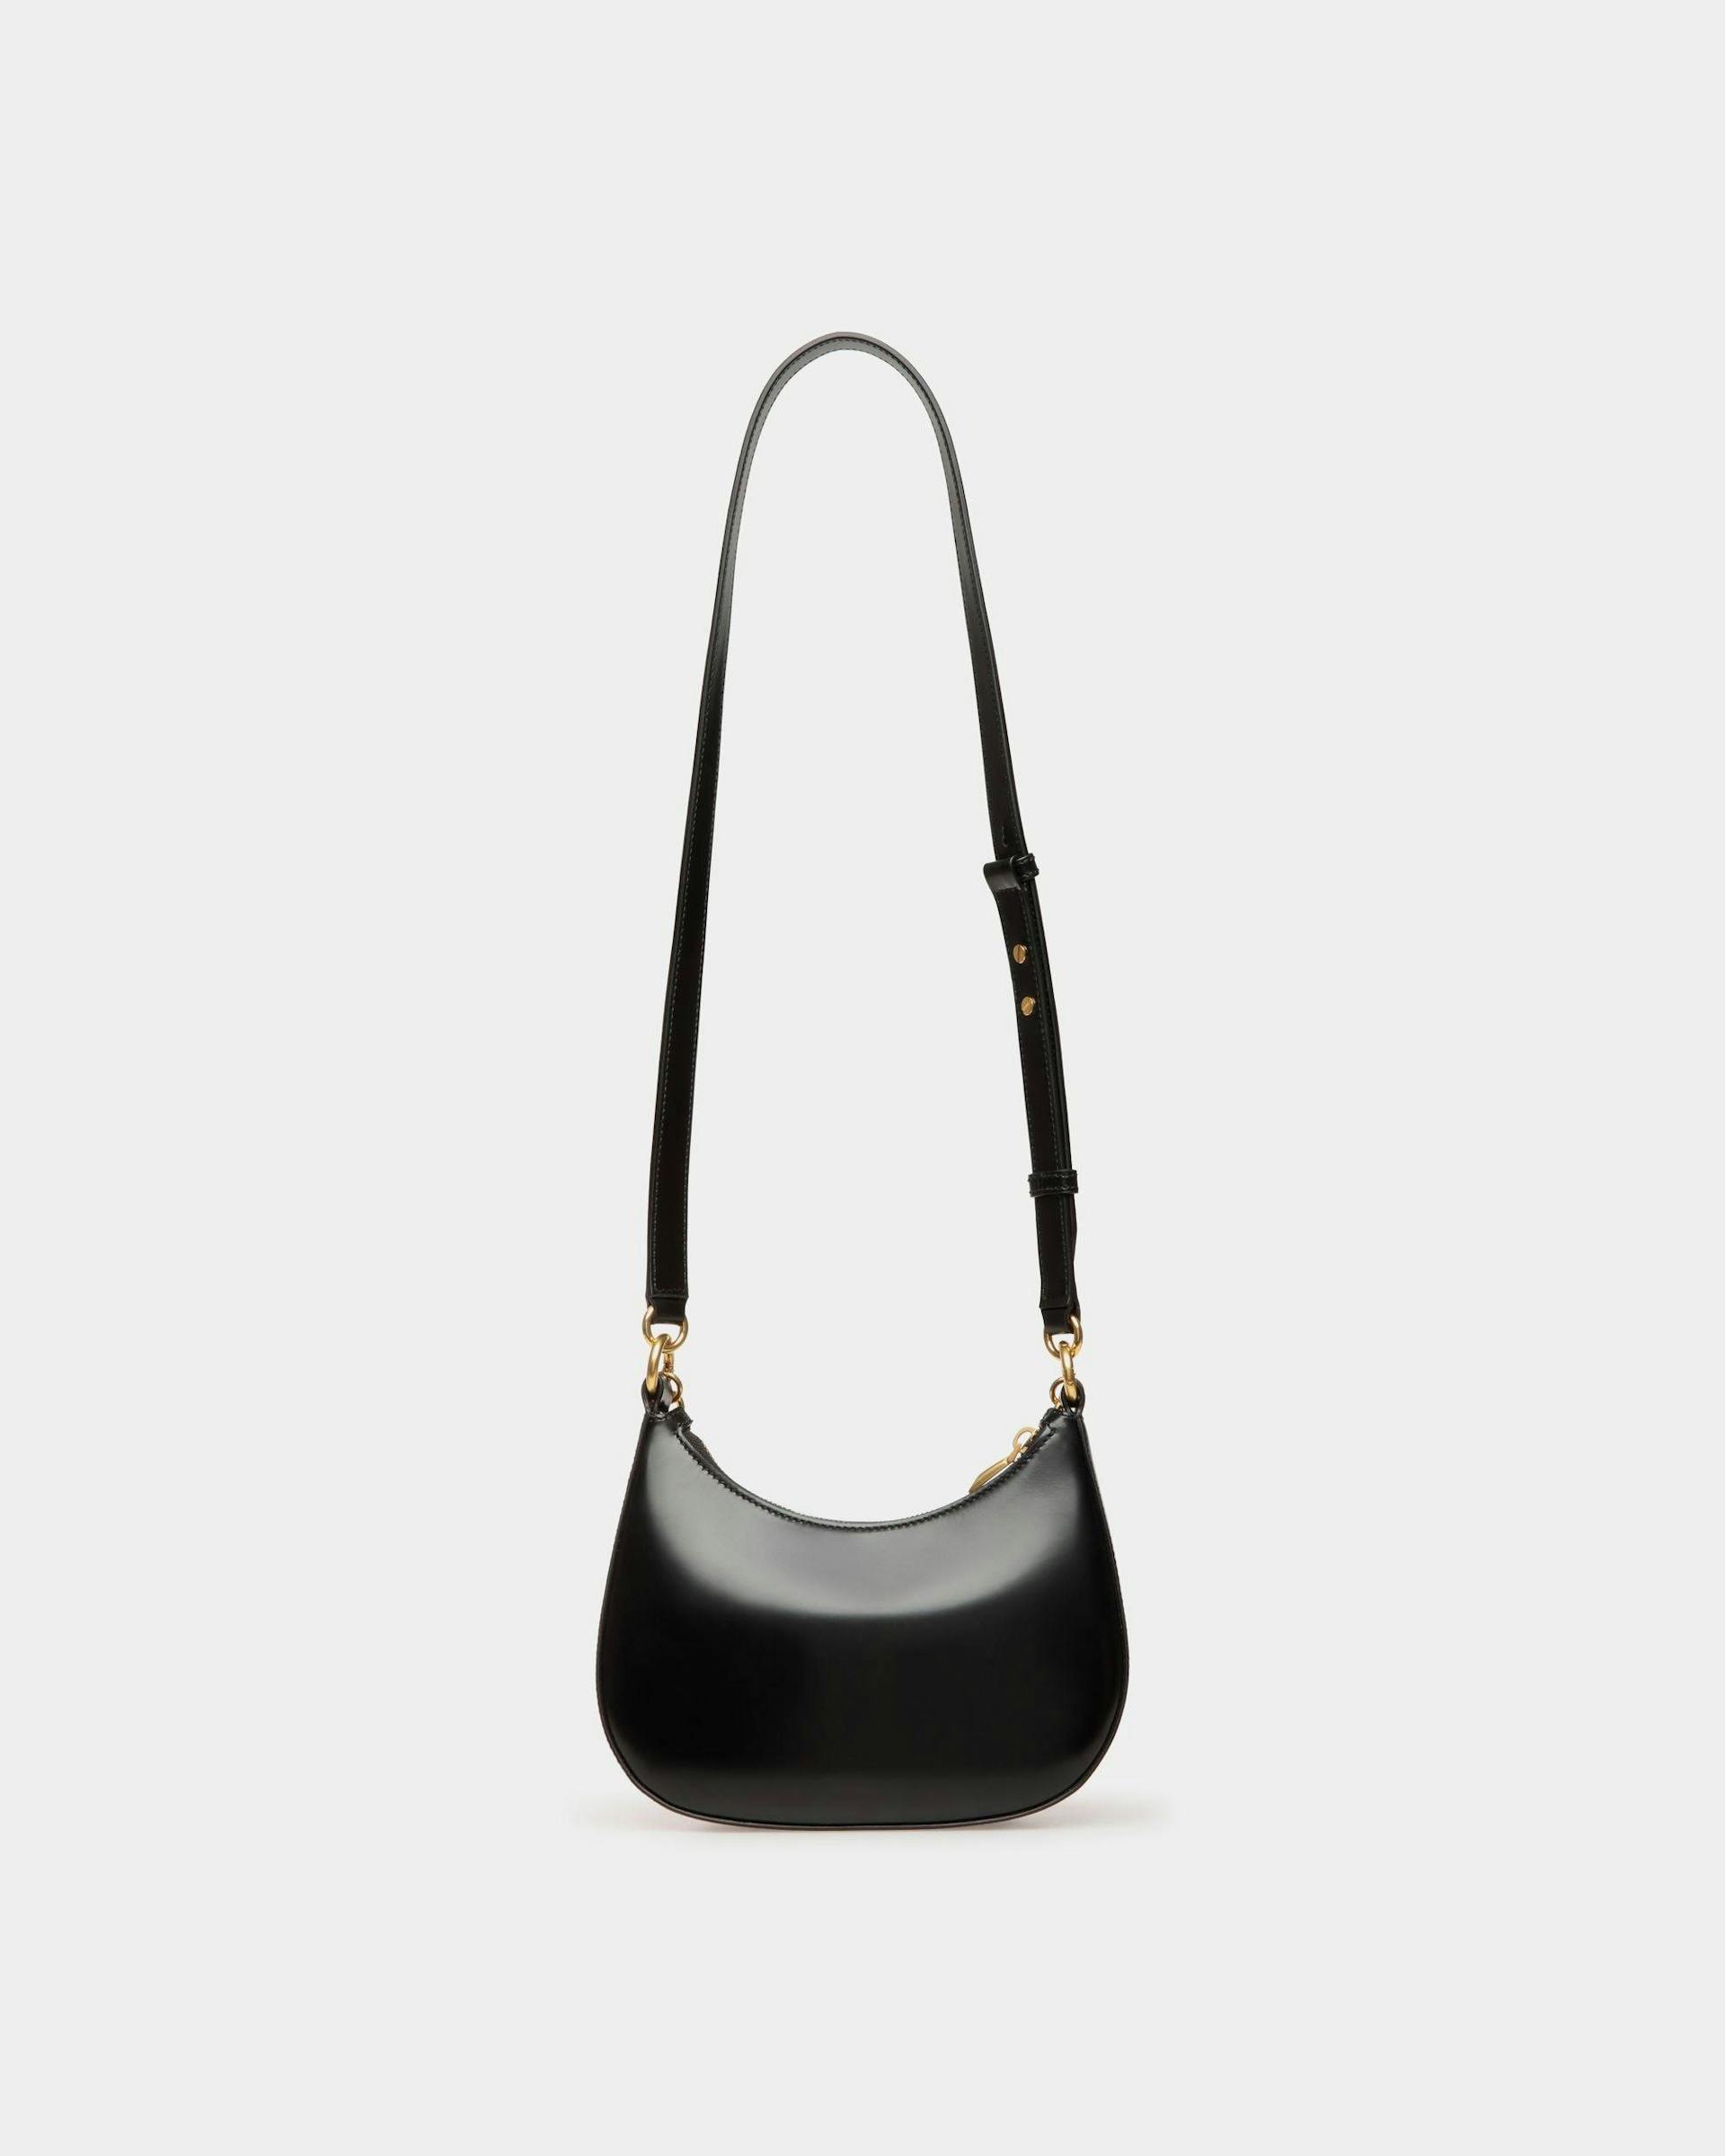 Women's Emblem Mini Crossbody Bag in Black Patent Leather | Bally | Still Life Back